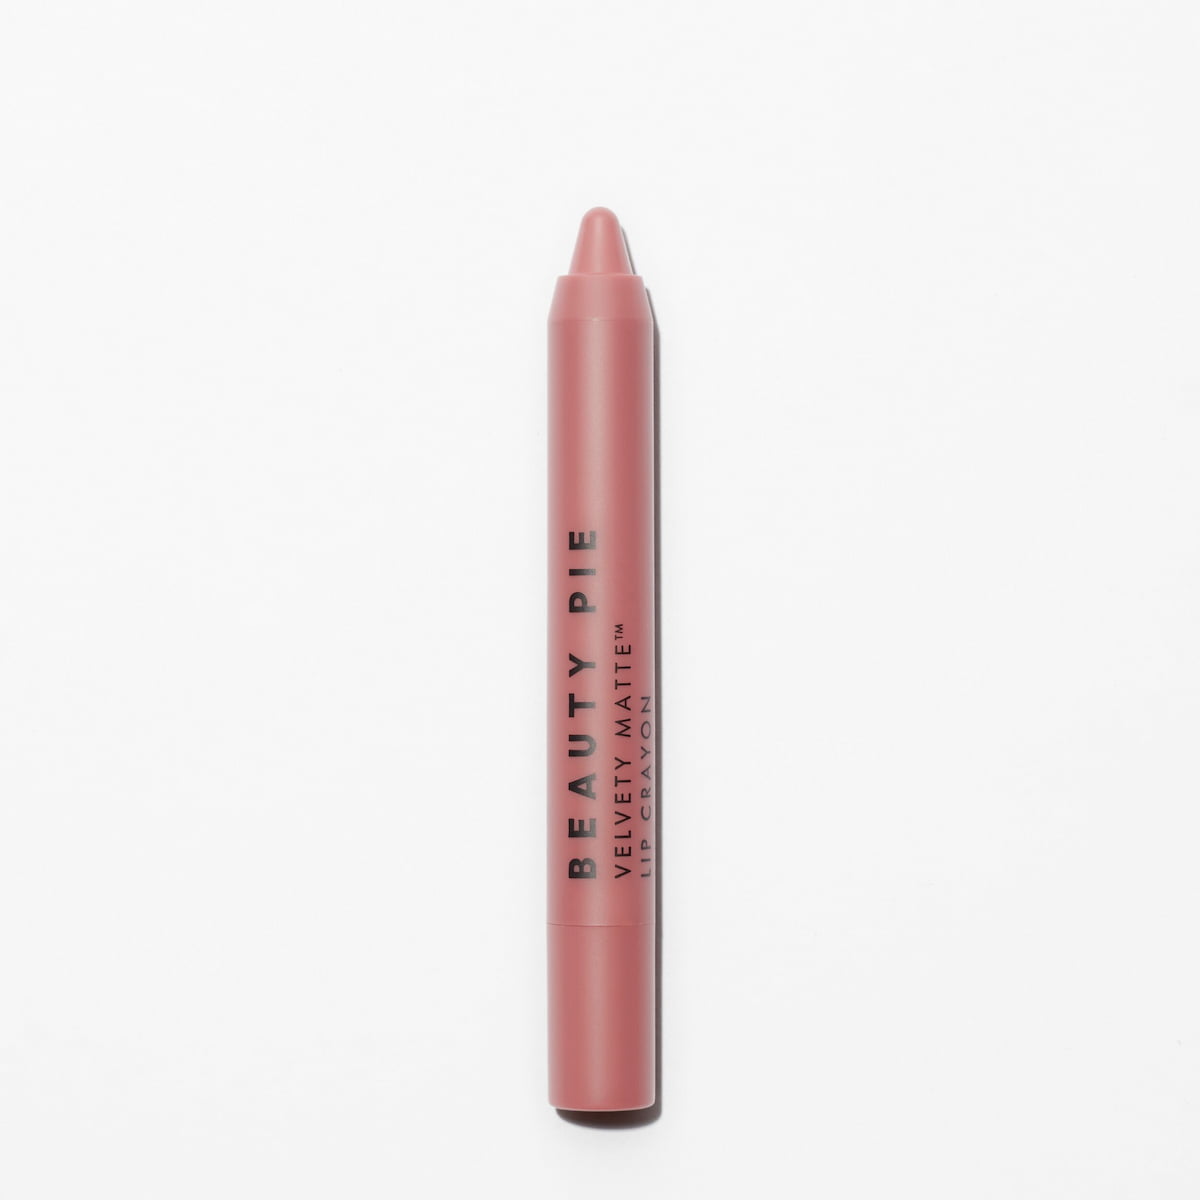 Beauty Pie + Matte Lip Crayon in Nude Go To